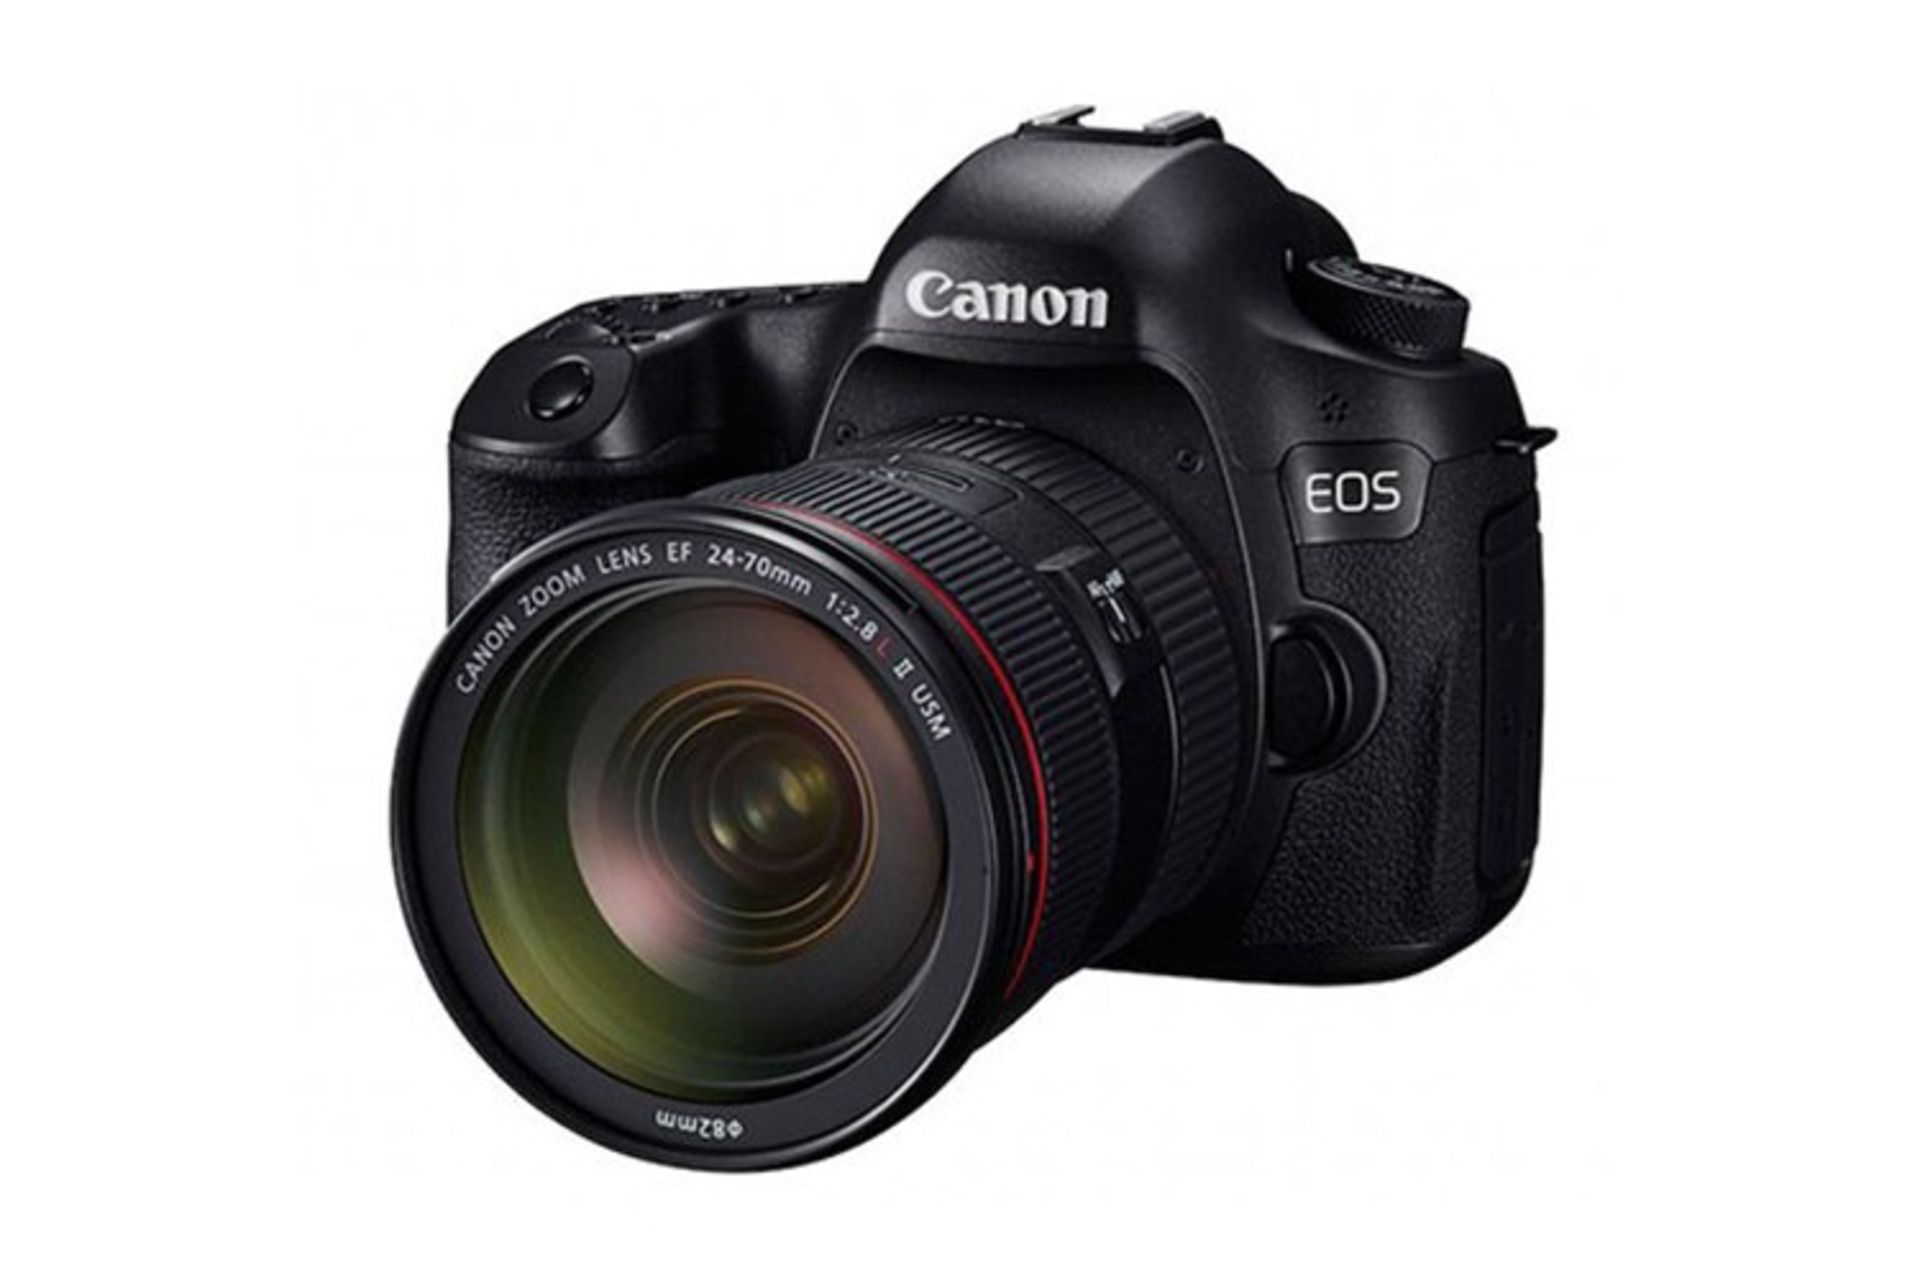 Canon DSLR